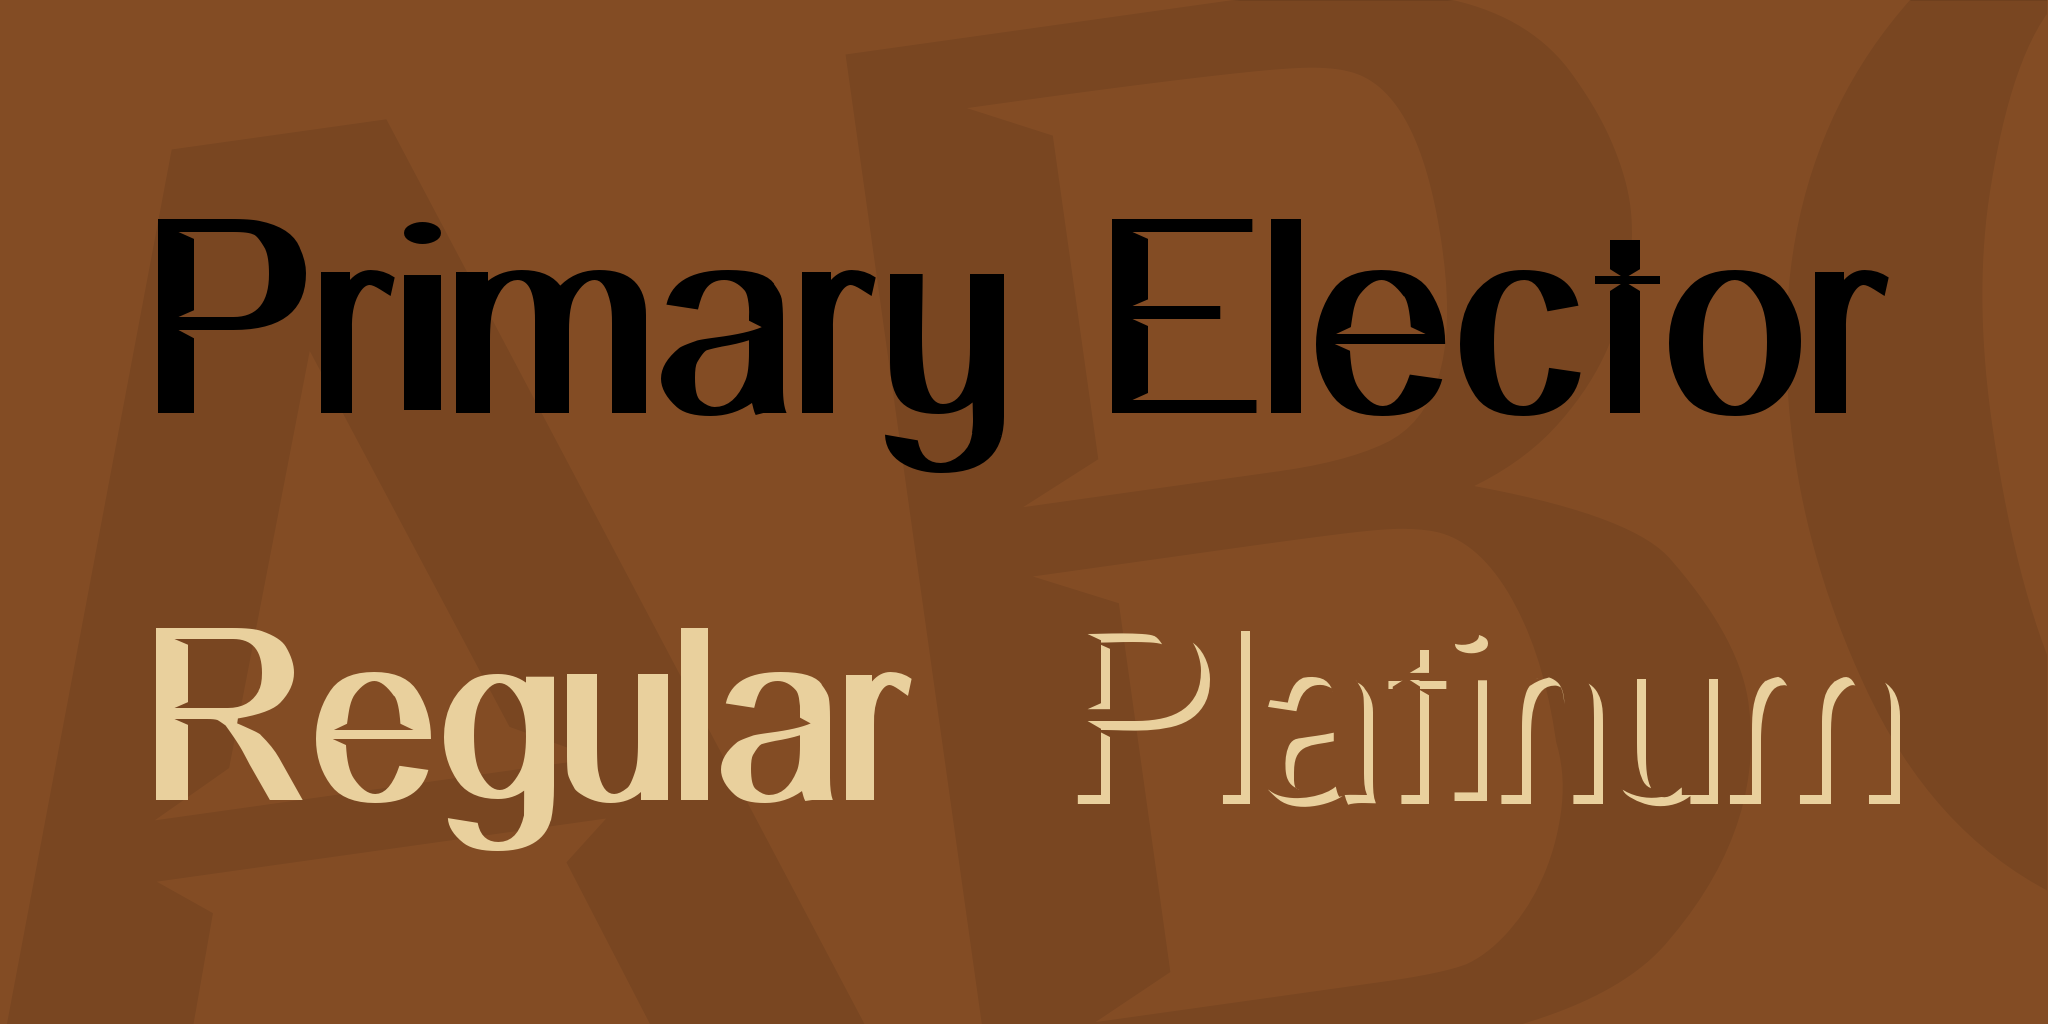 Primary Elector